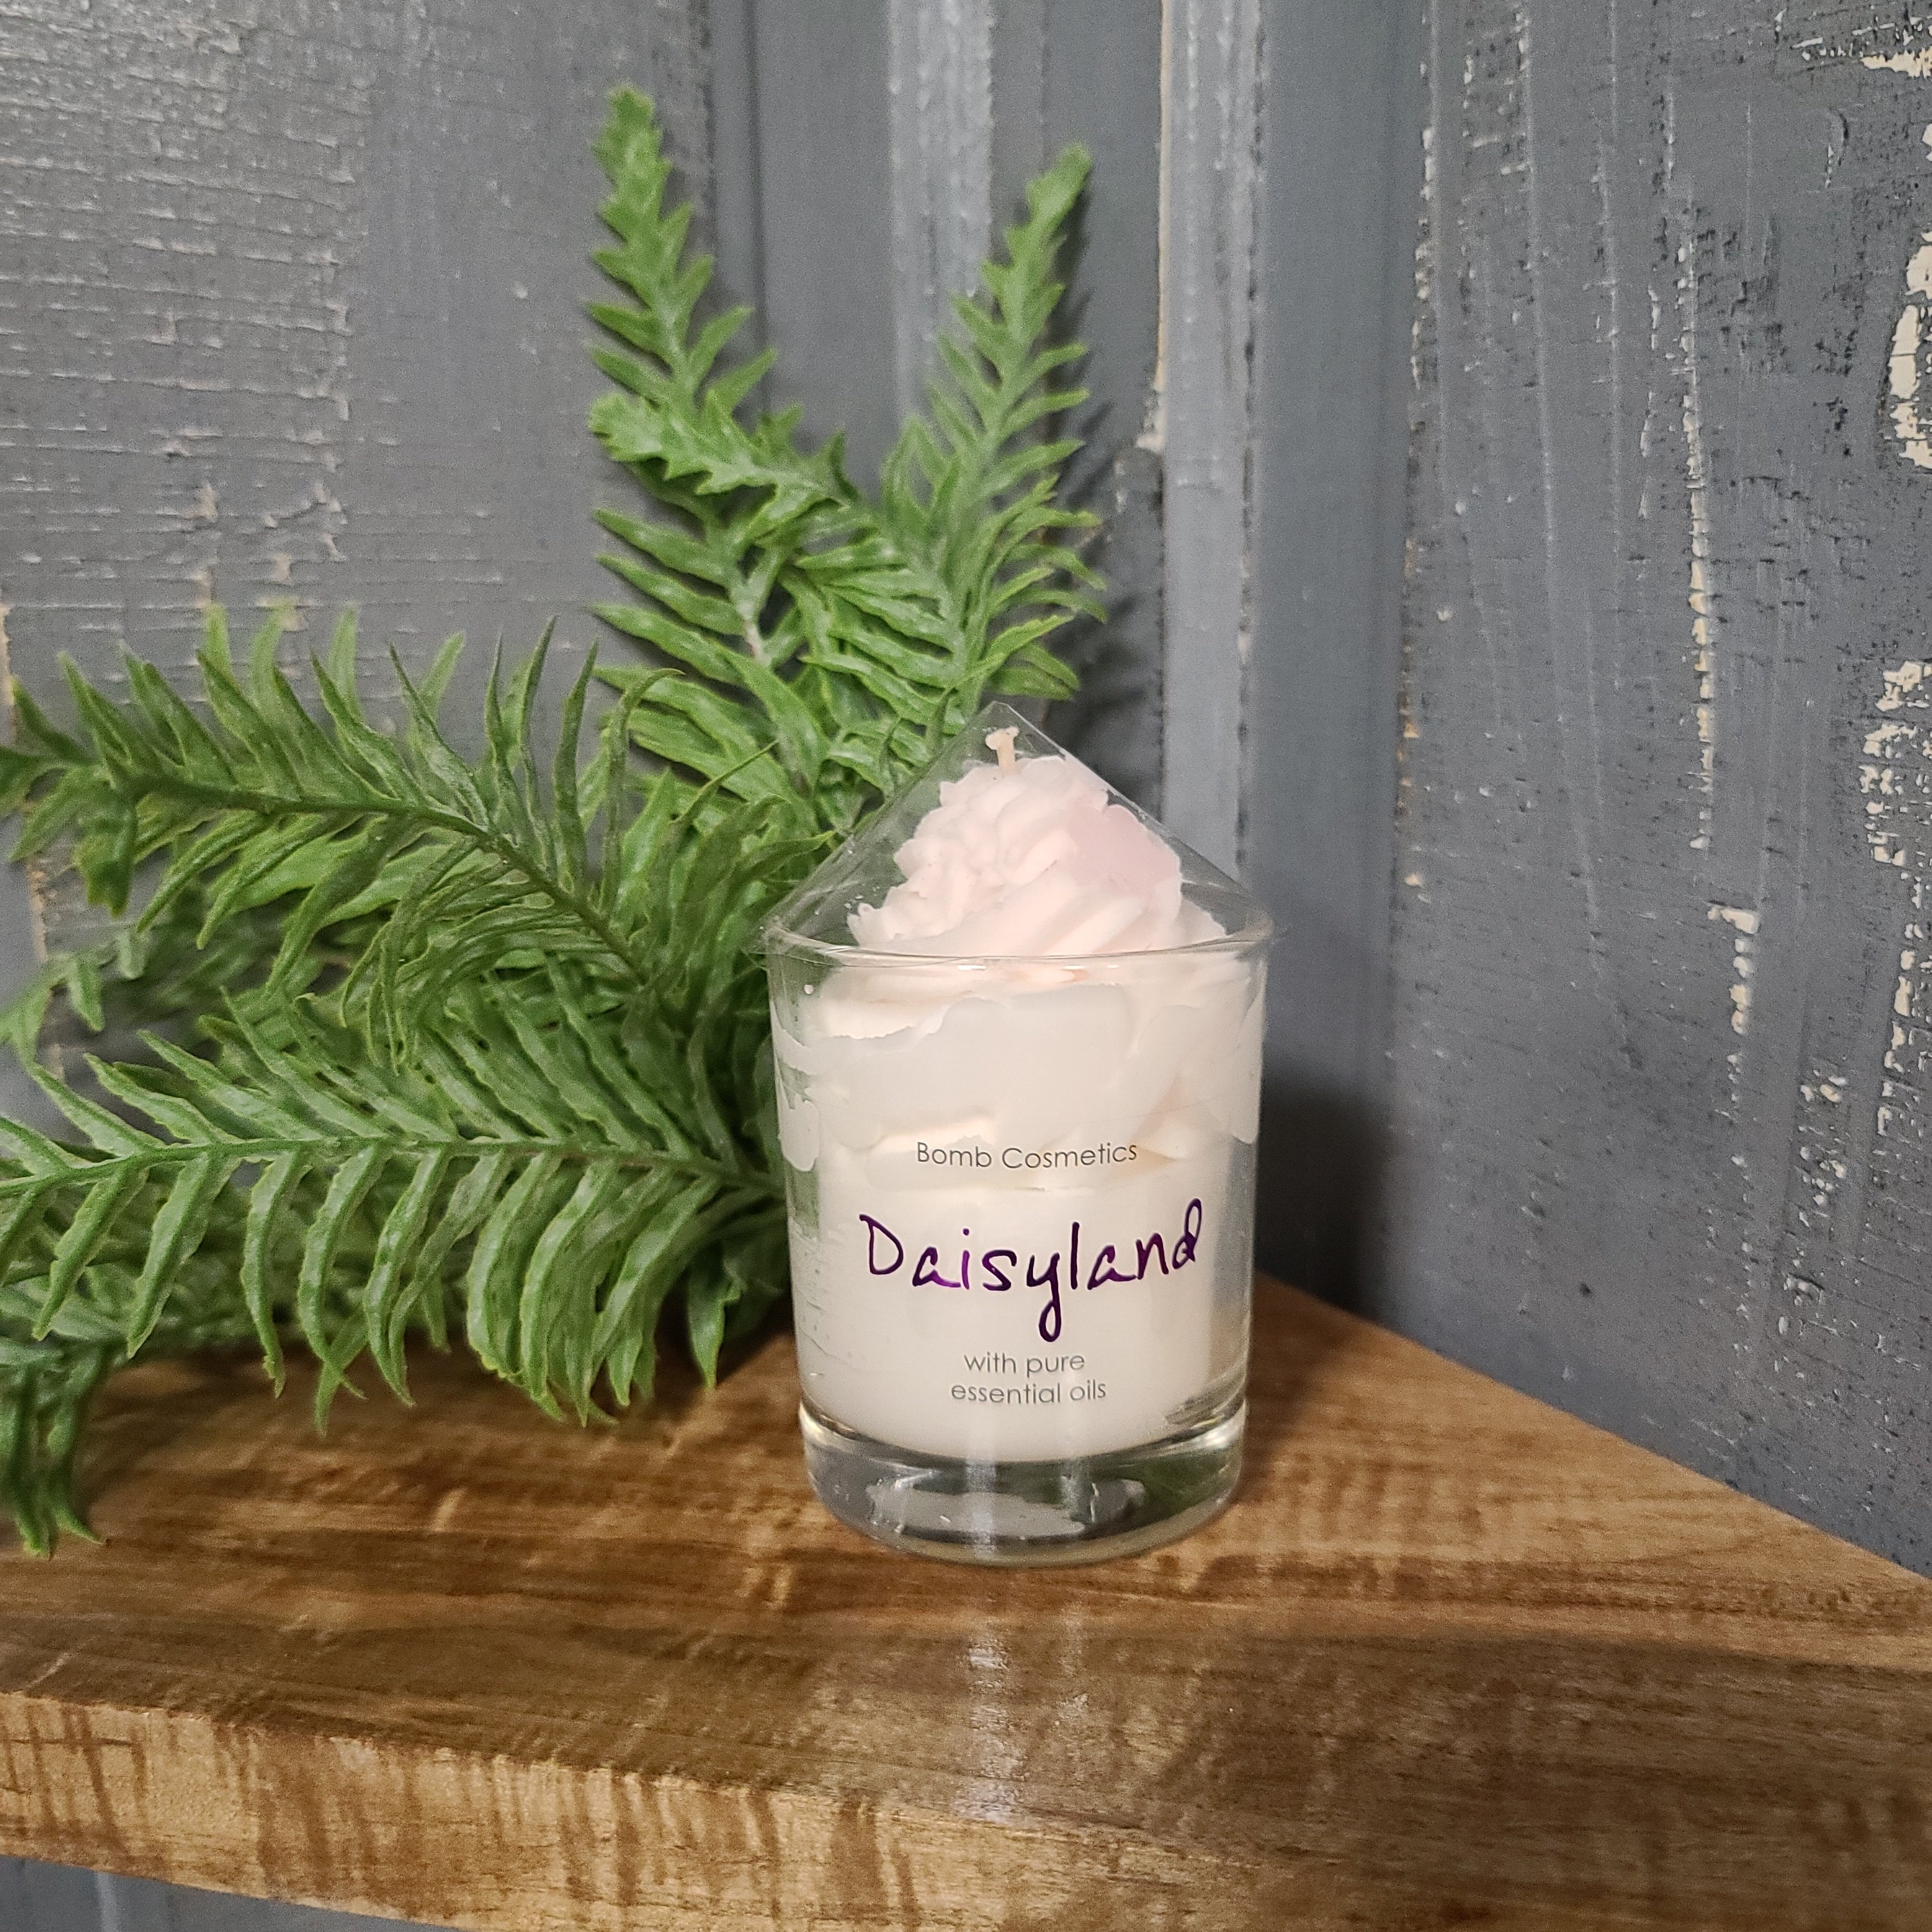 Daisyland candle